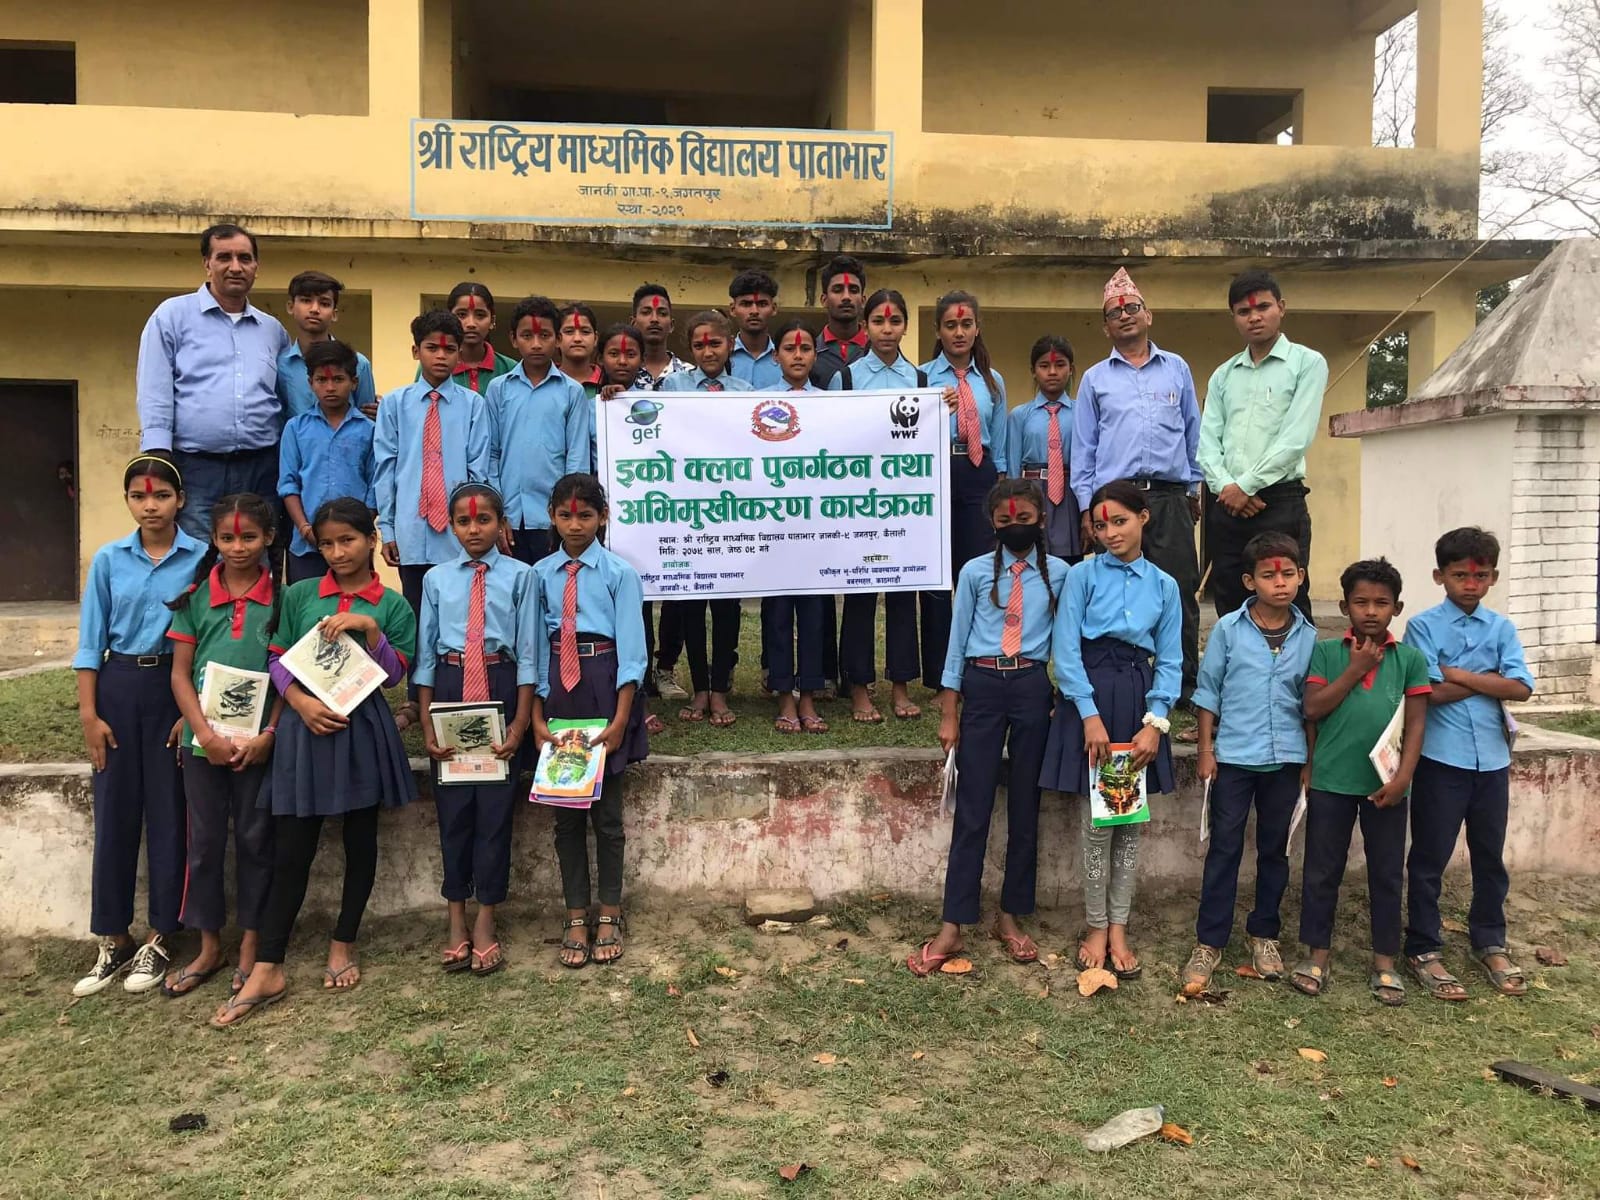 Eco Club formation and orientation program in Shree Rastriya Secondary School, Patabhar, Janaki - 9, Kailali